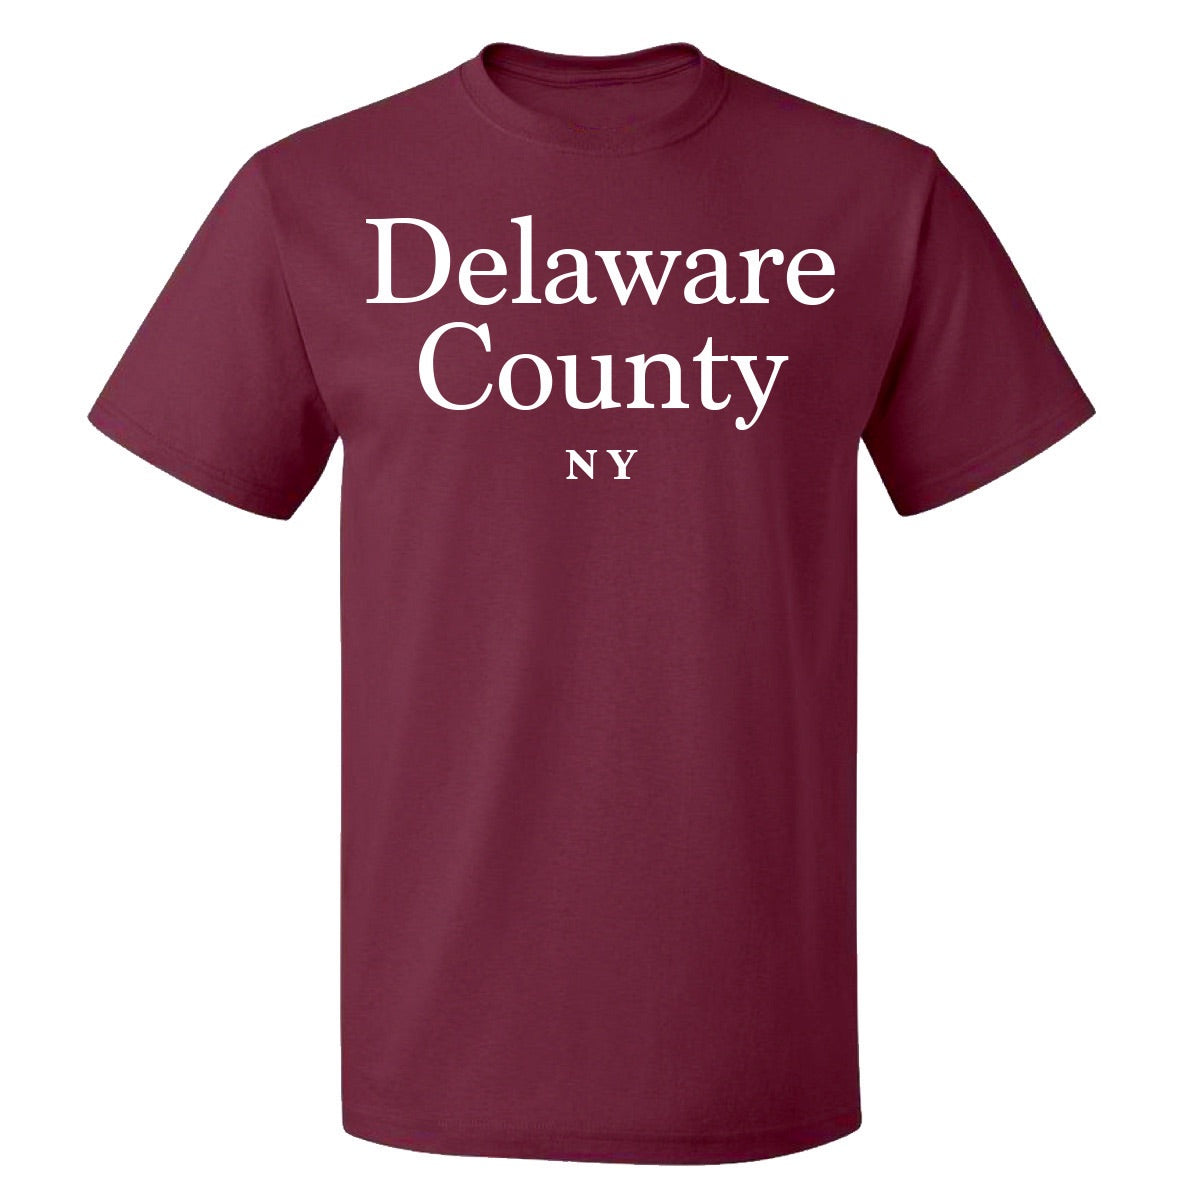 Delaware County T-shirt - Maroon